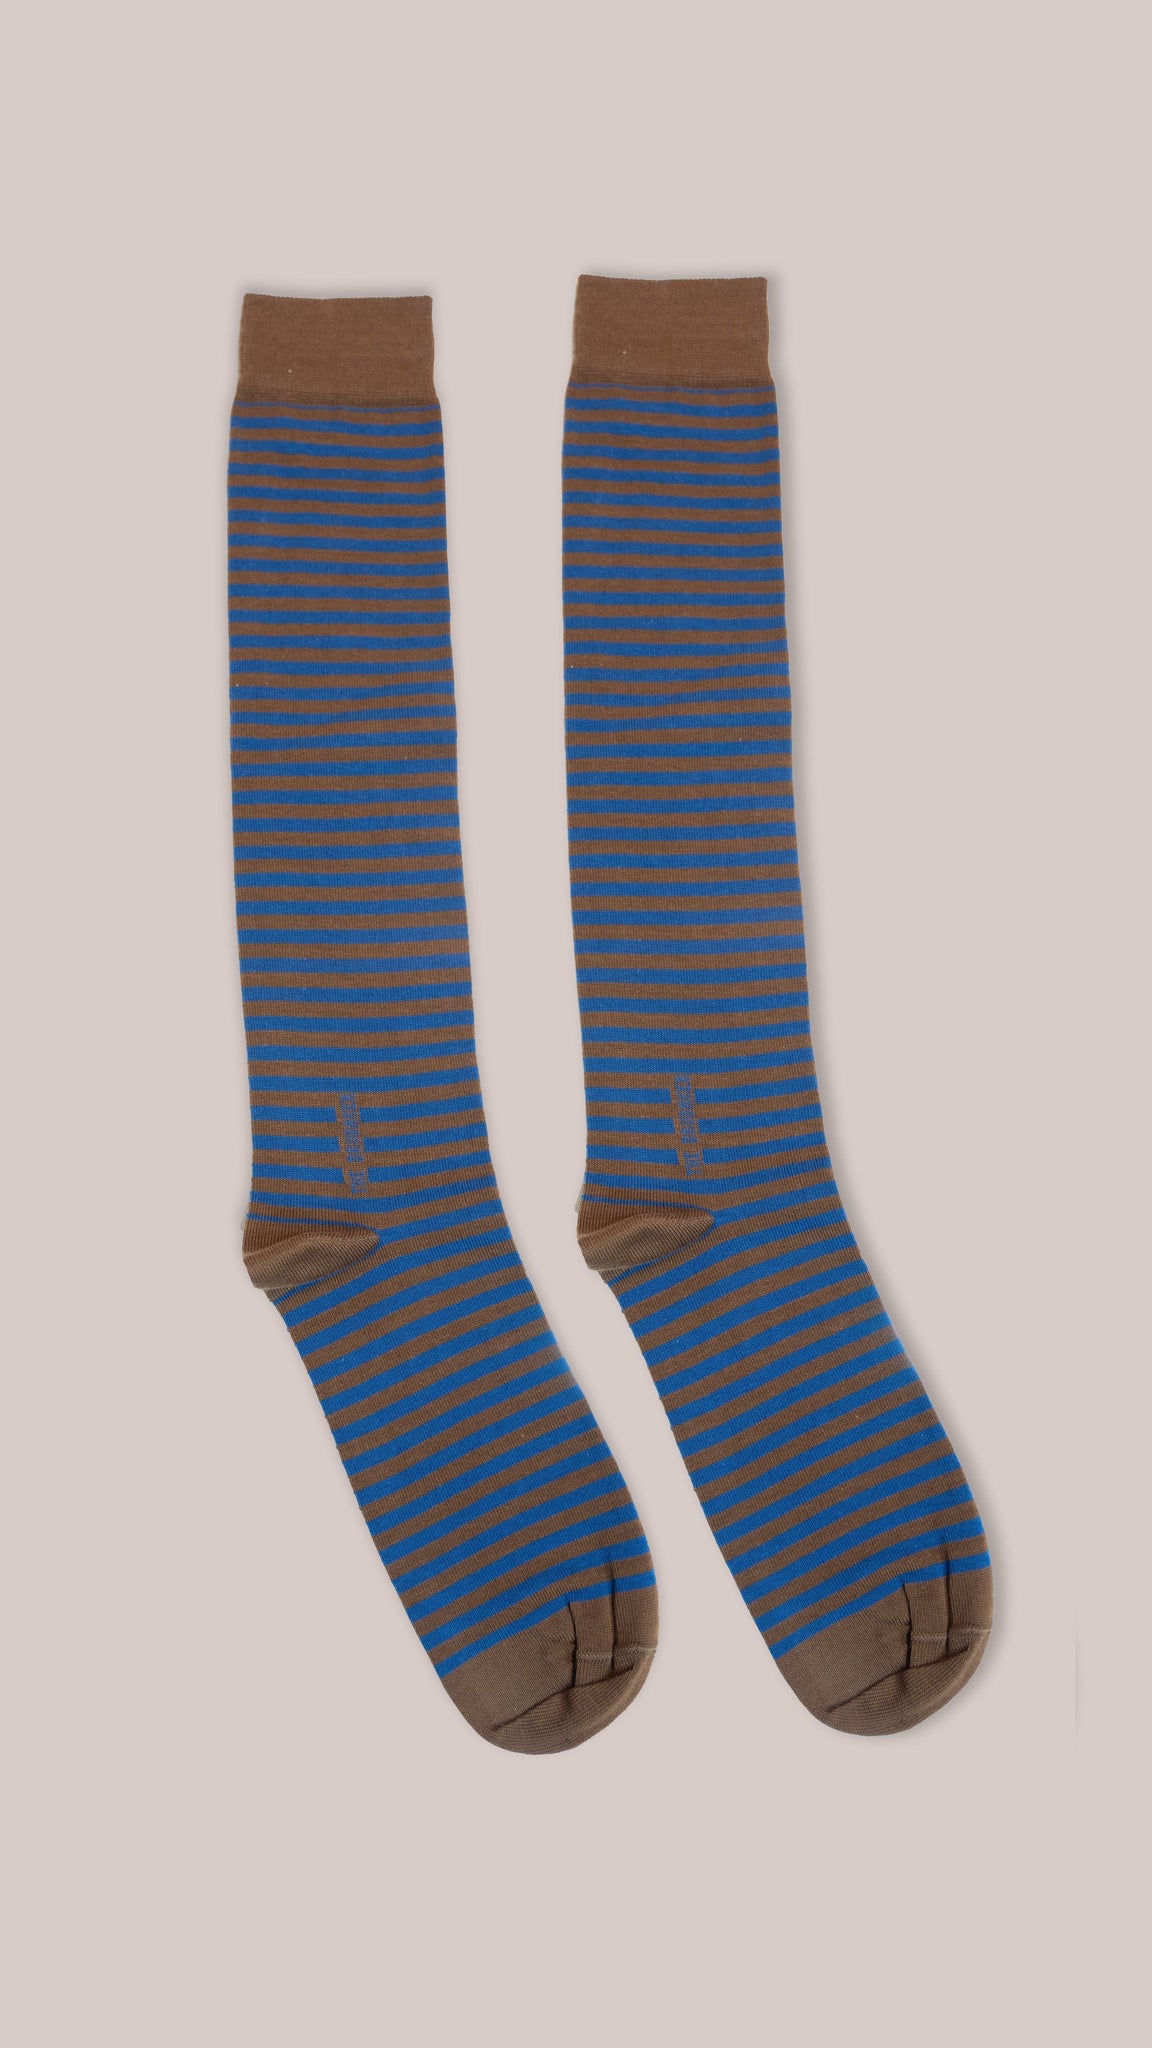 The Sock Rayas Marrón y Azul Long